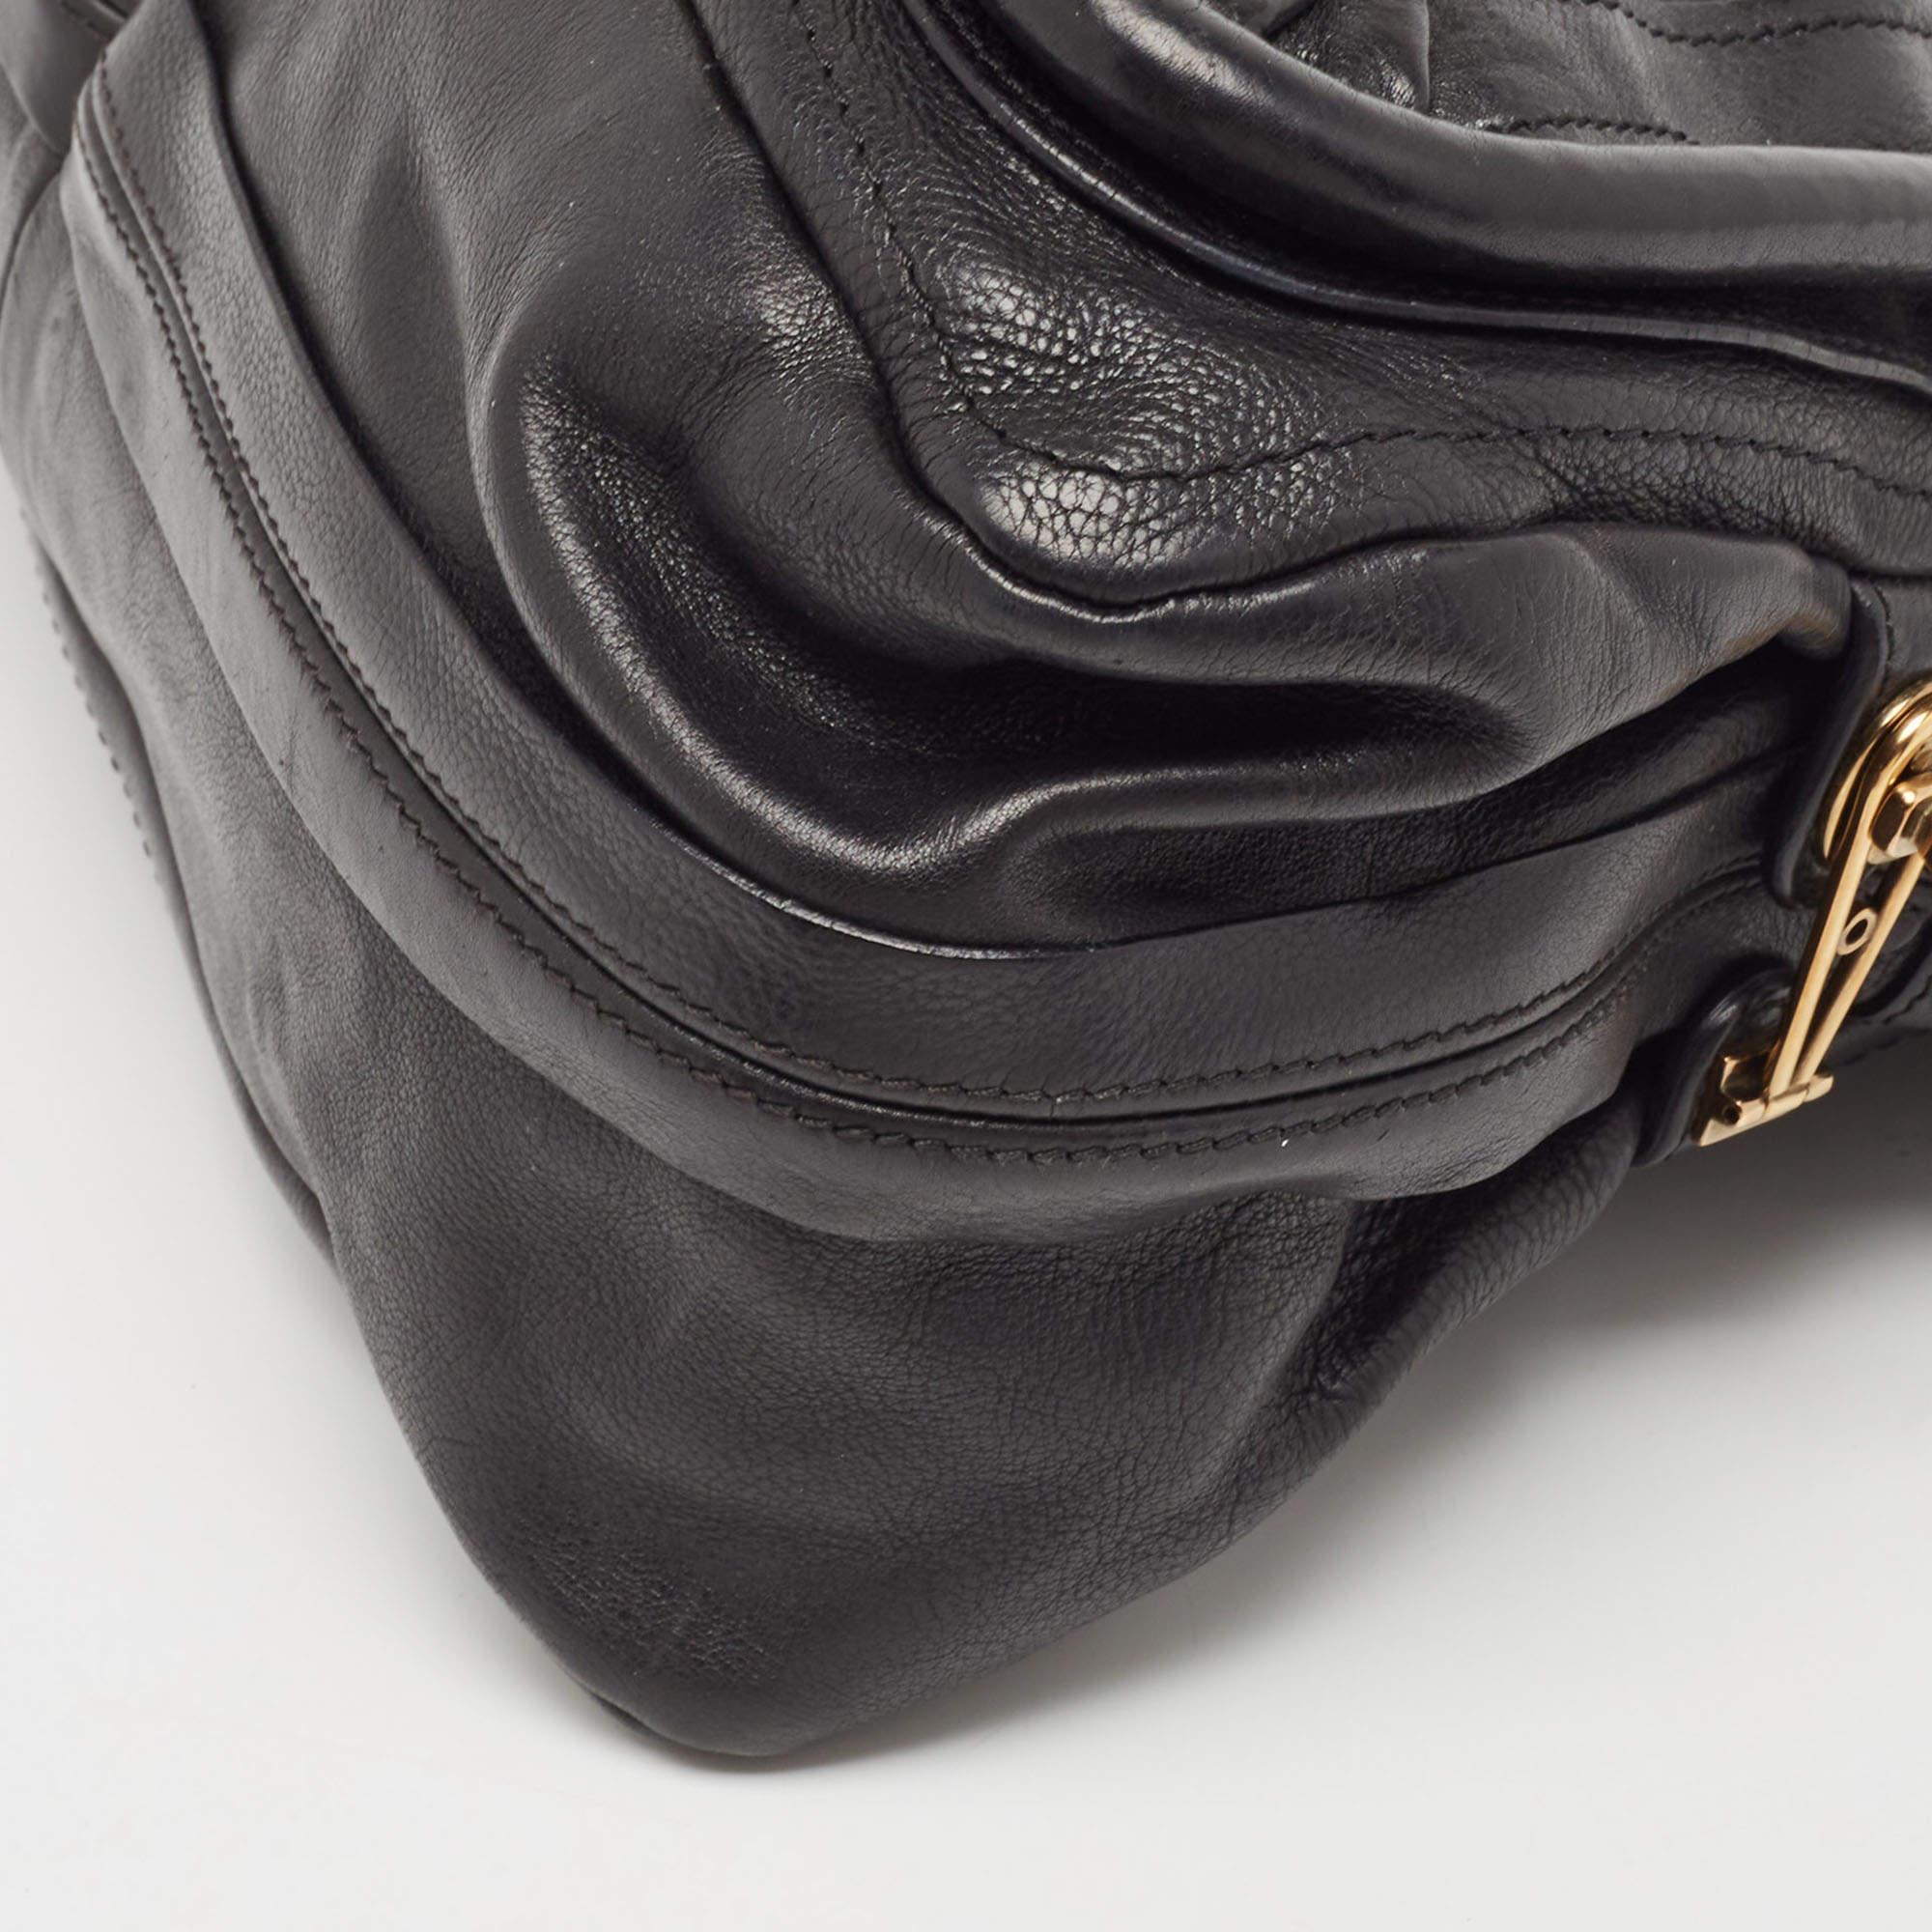 Chloe Black Leather Medium Paraty Satchel For Sale 9